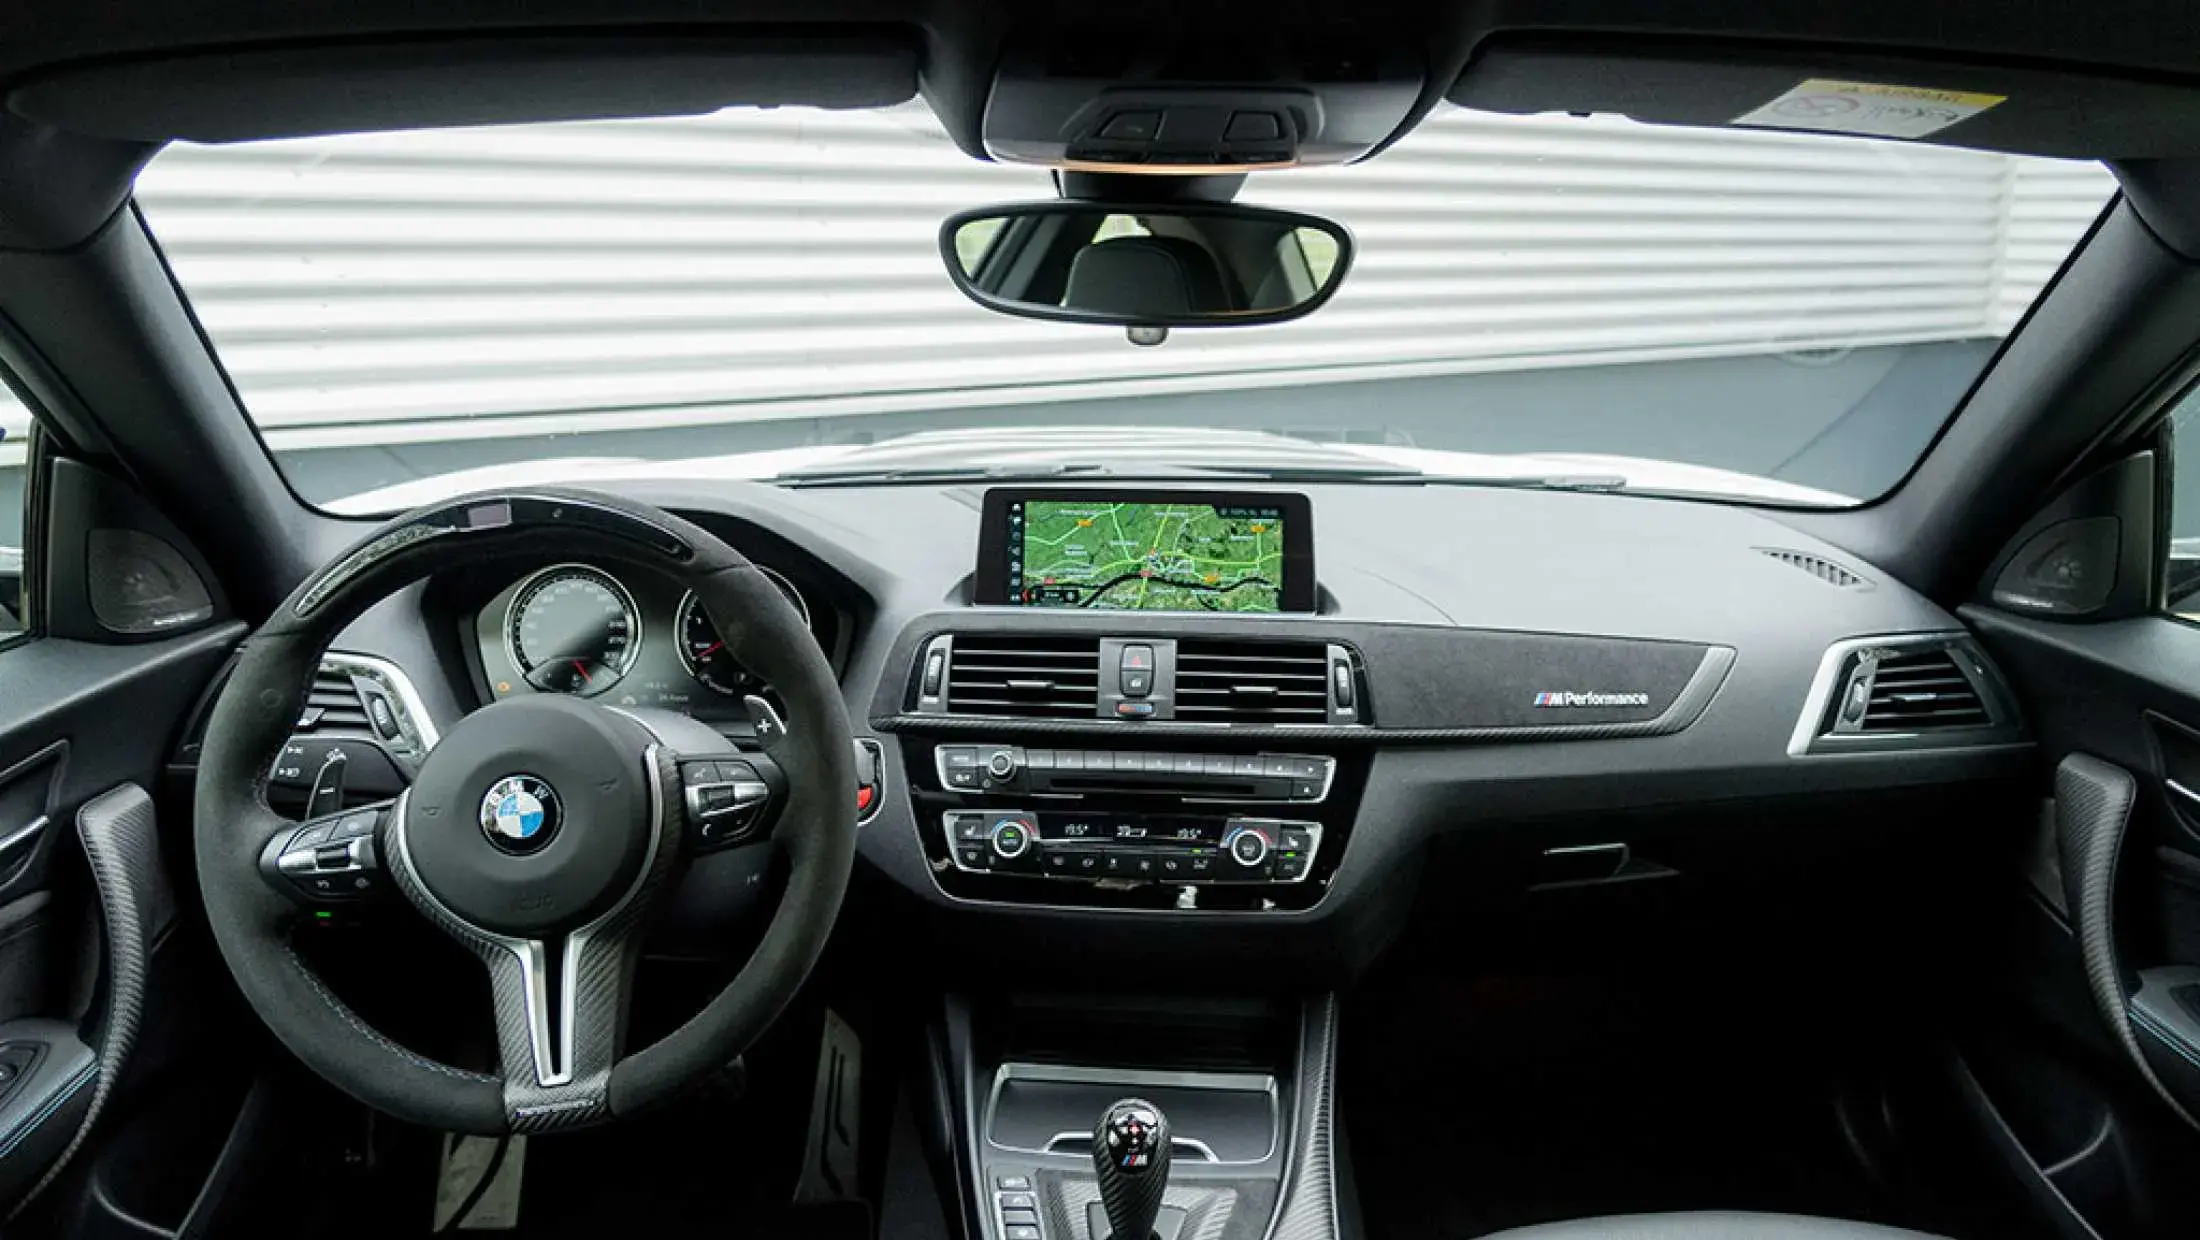 BMW M2 competition prijs